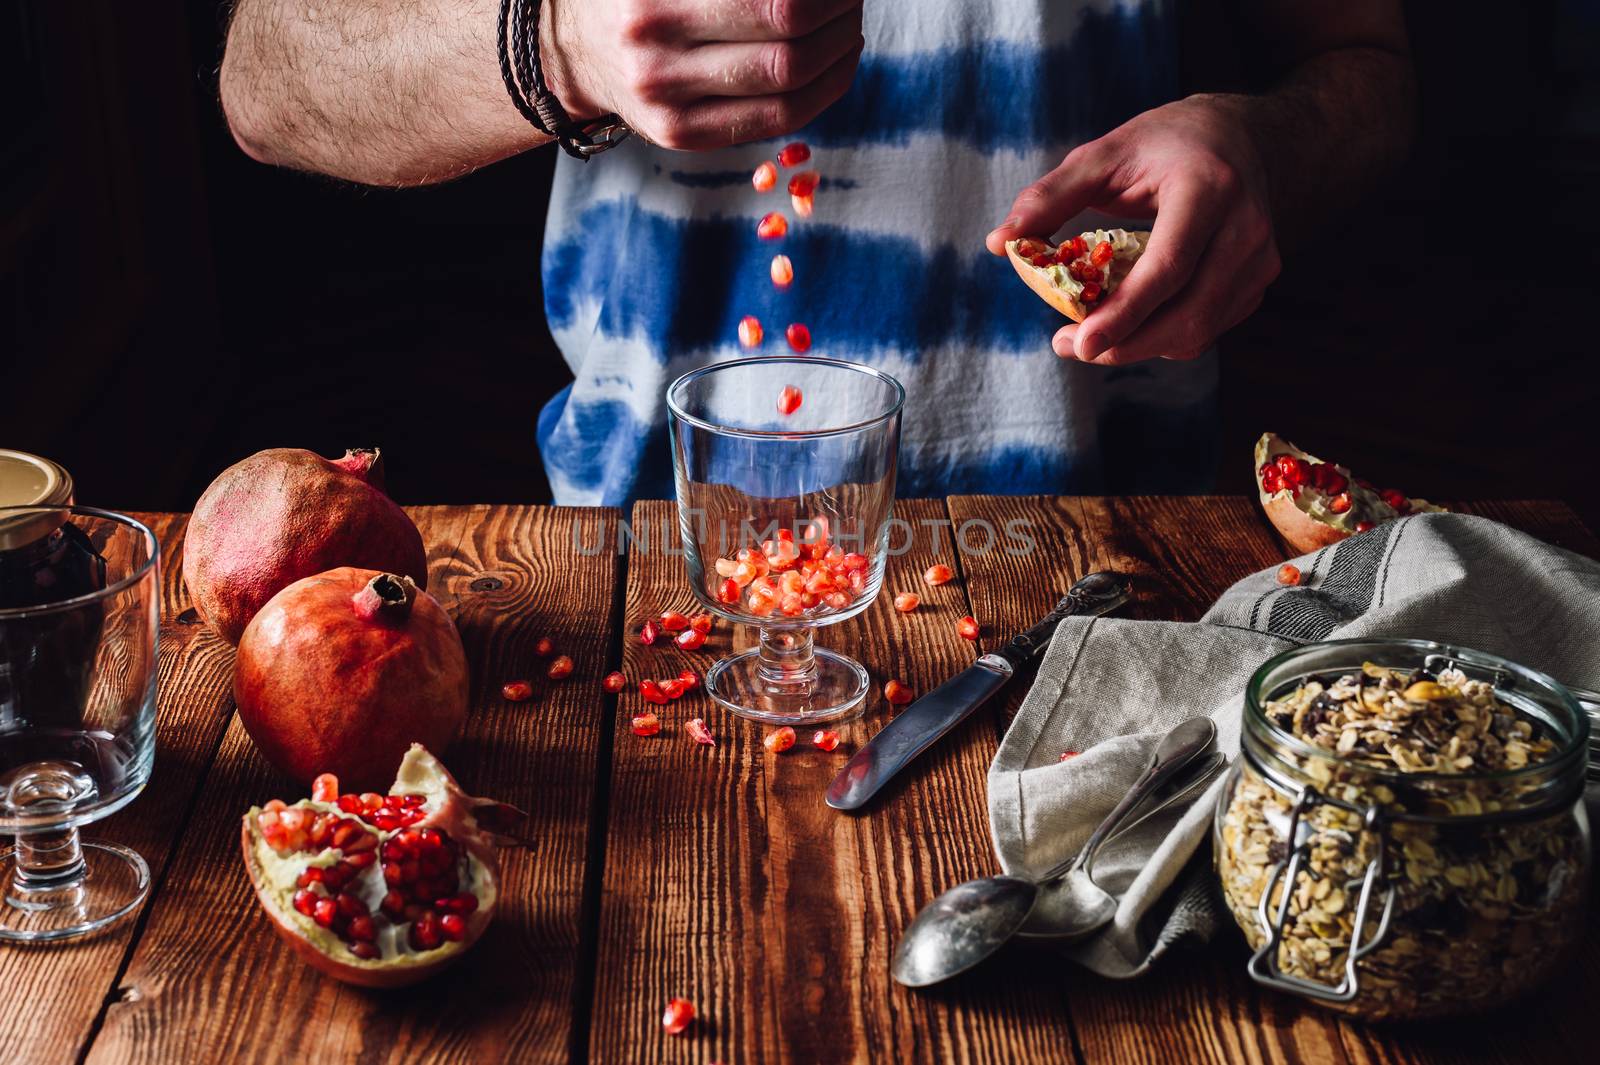 Man Puts Pomegranate Seeds into the Glass. by Seva_blsv